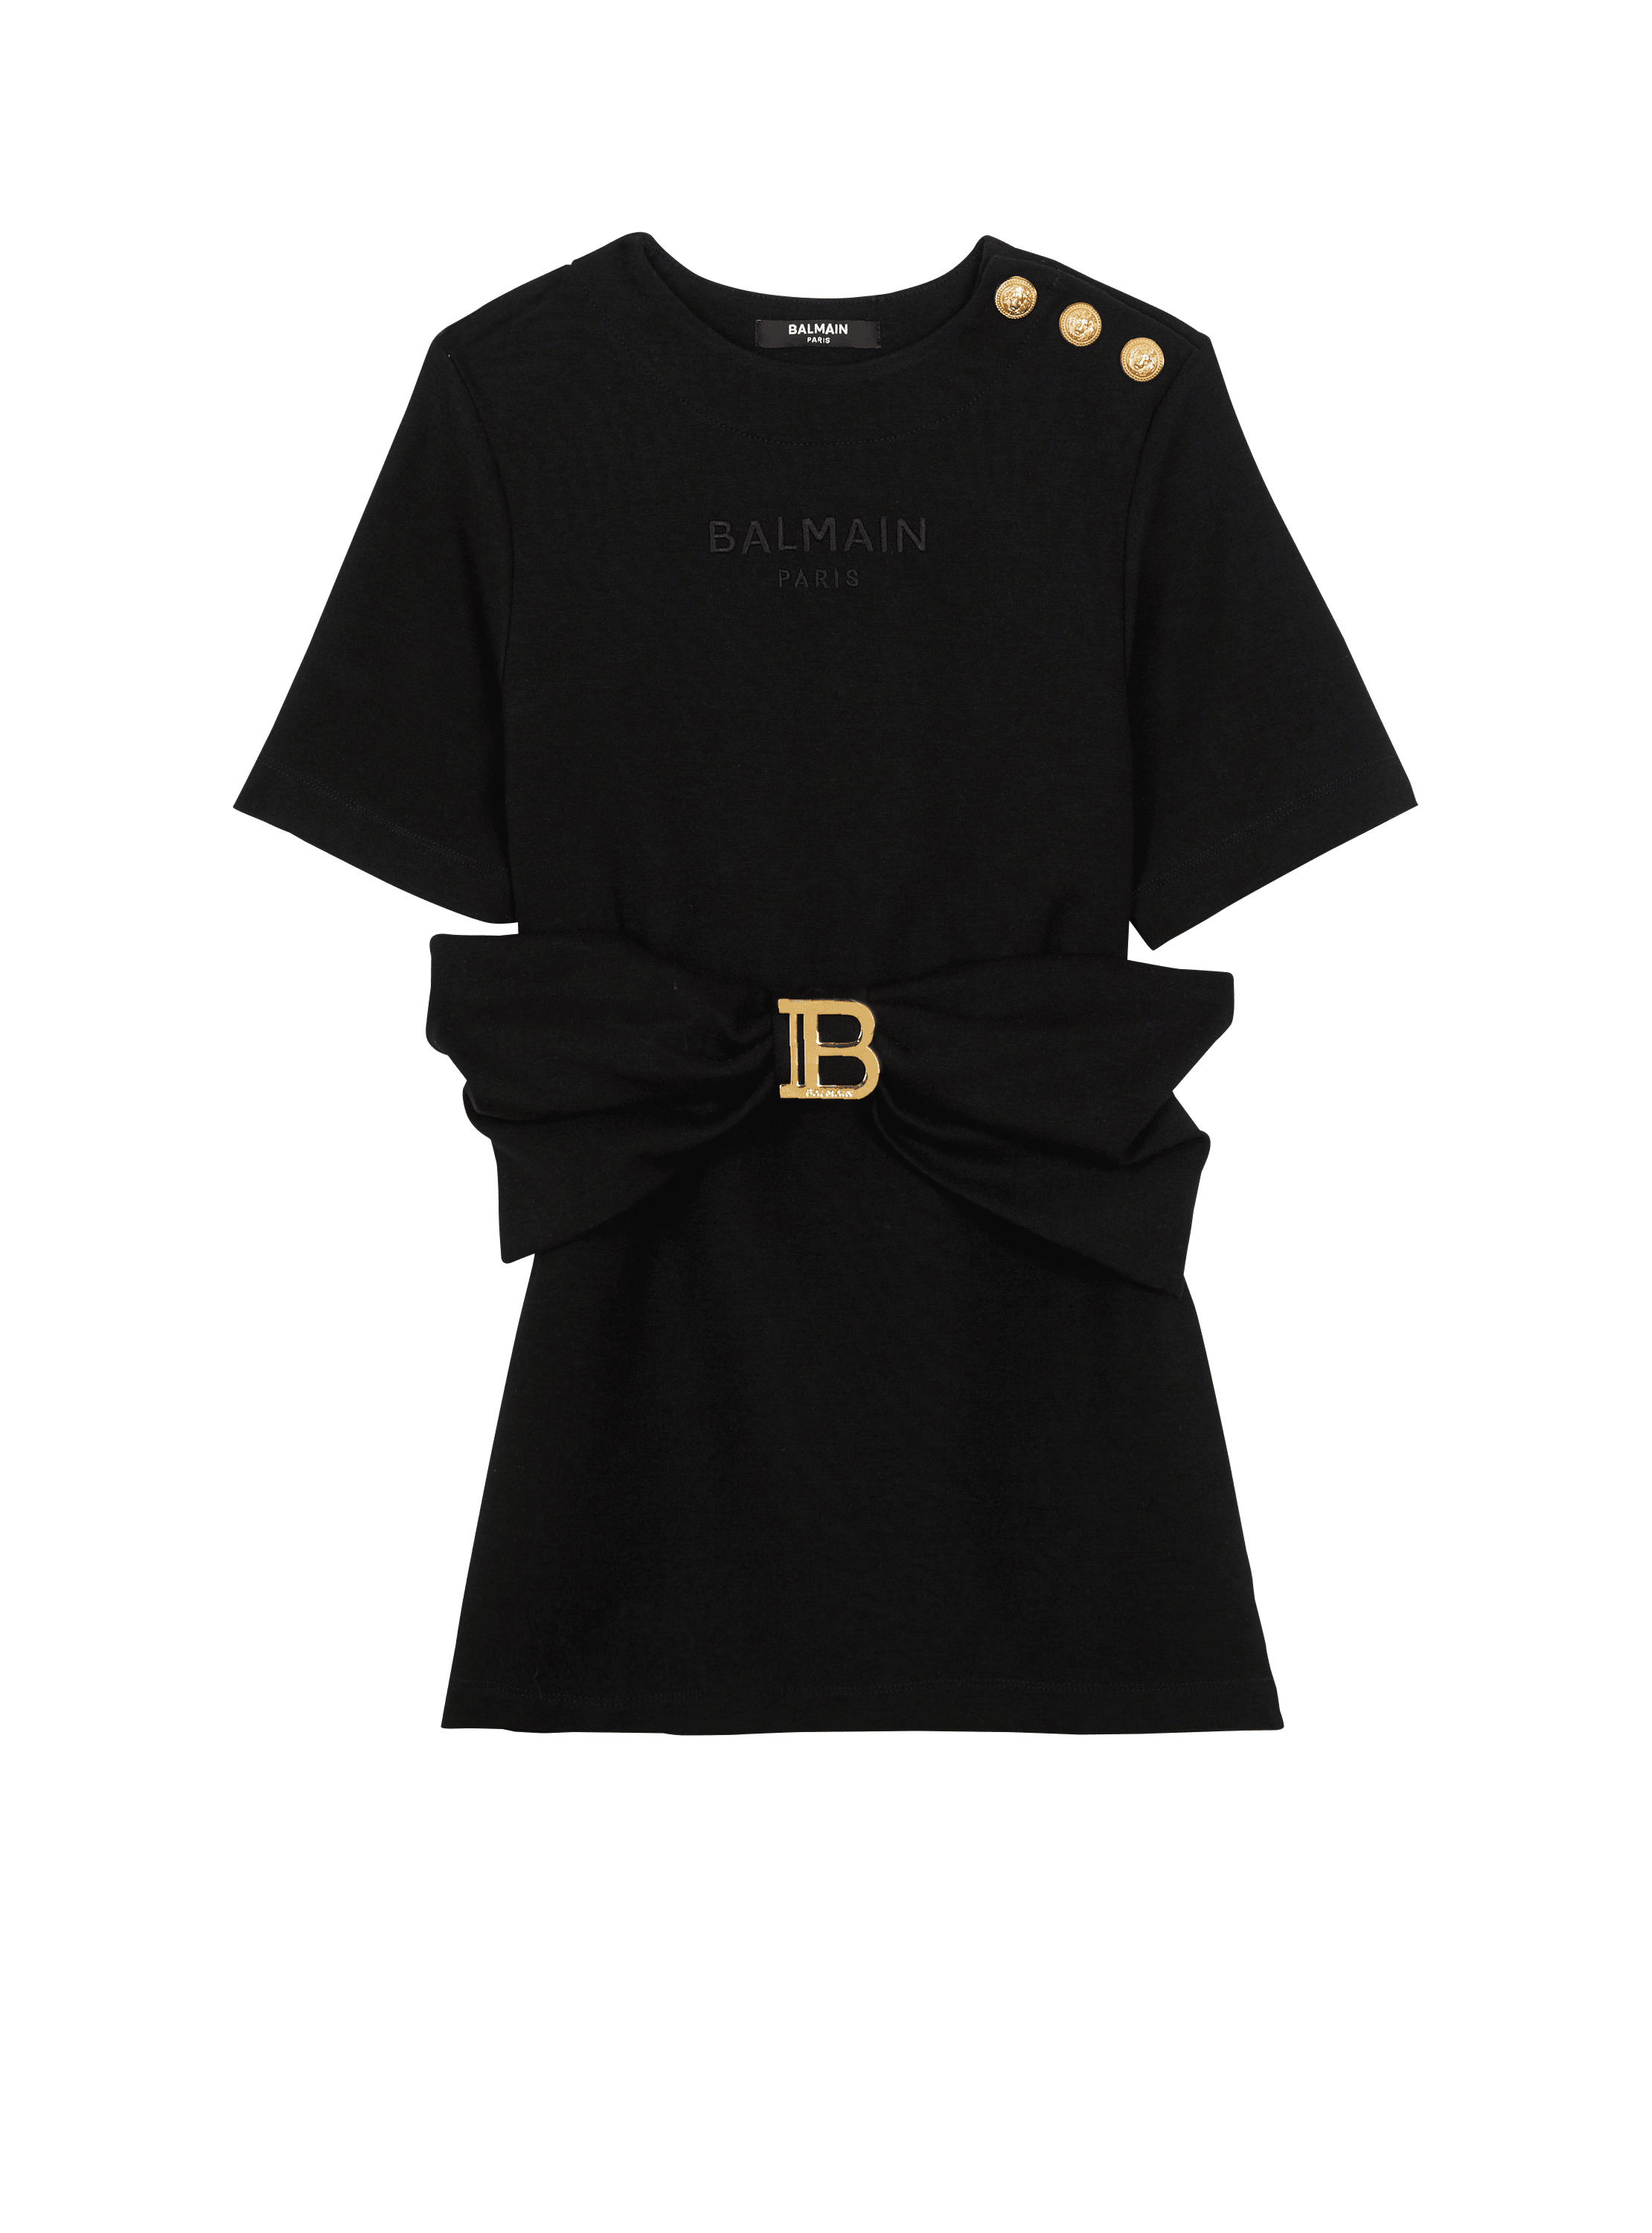 B T-shirt dress